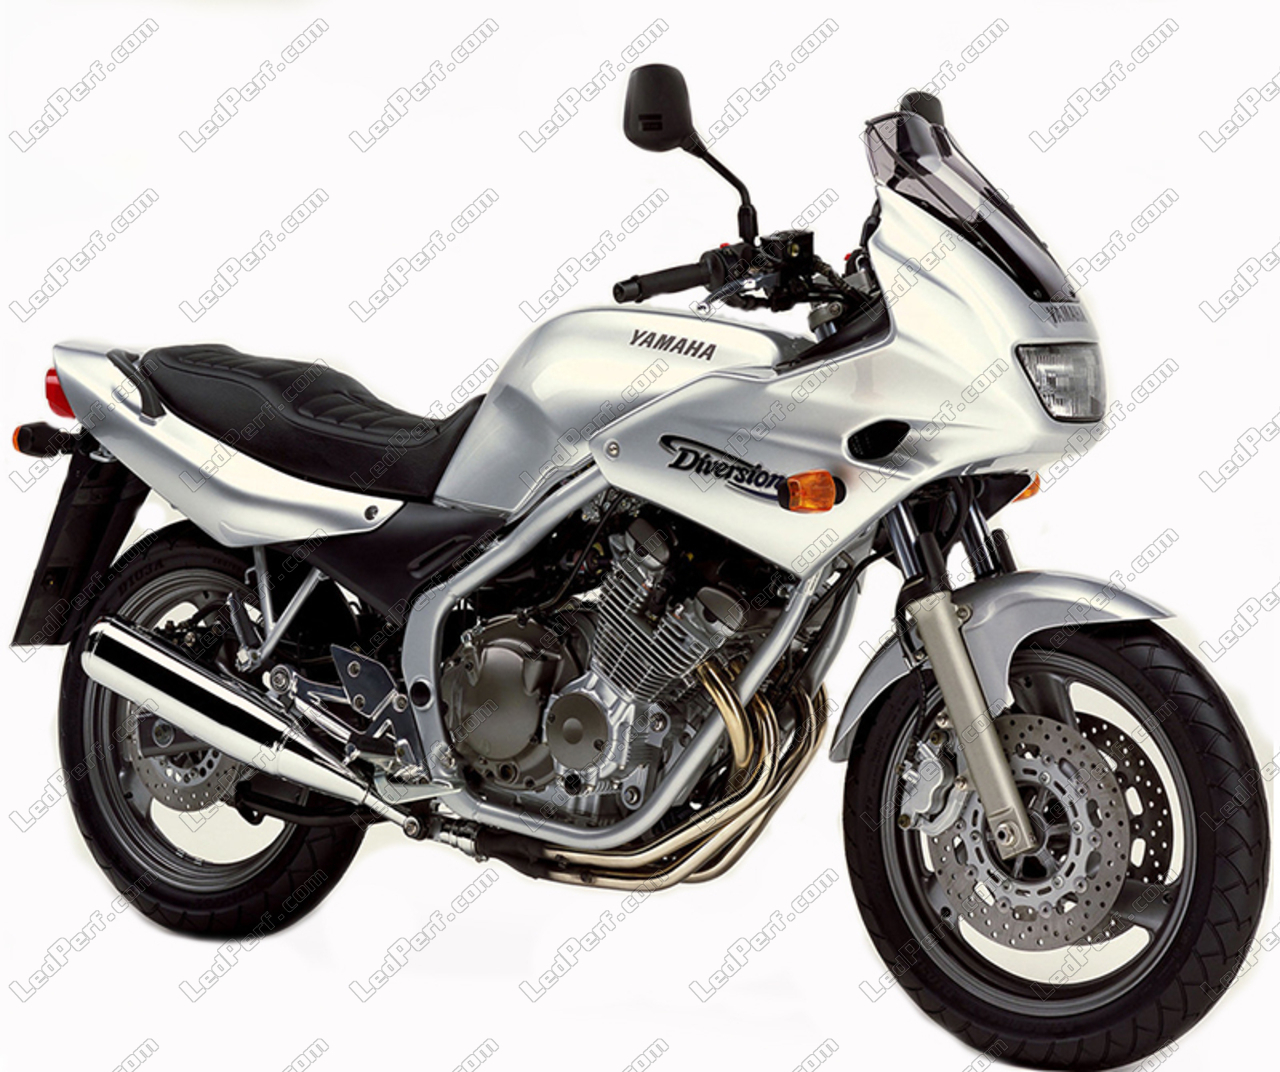 led-bulb-kit-for-yamaha-xj-600-s-diversion-motorcycle_52886.jpg